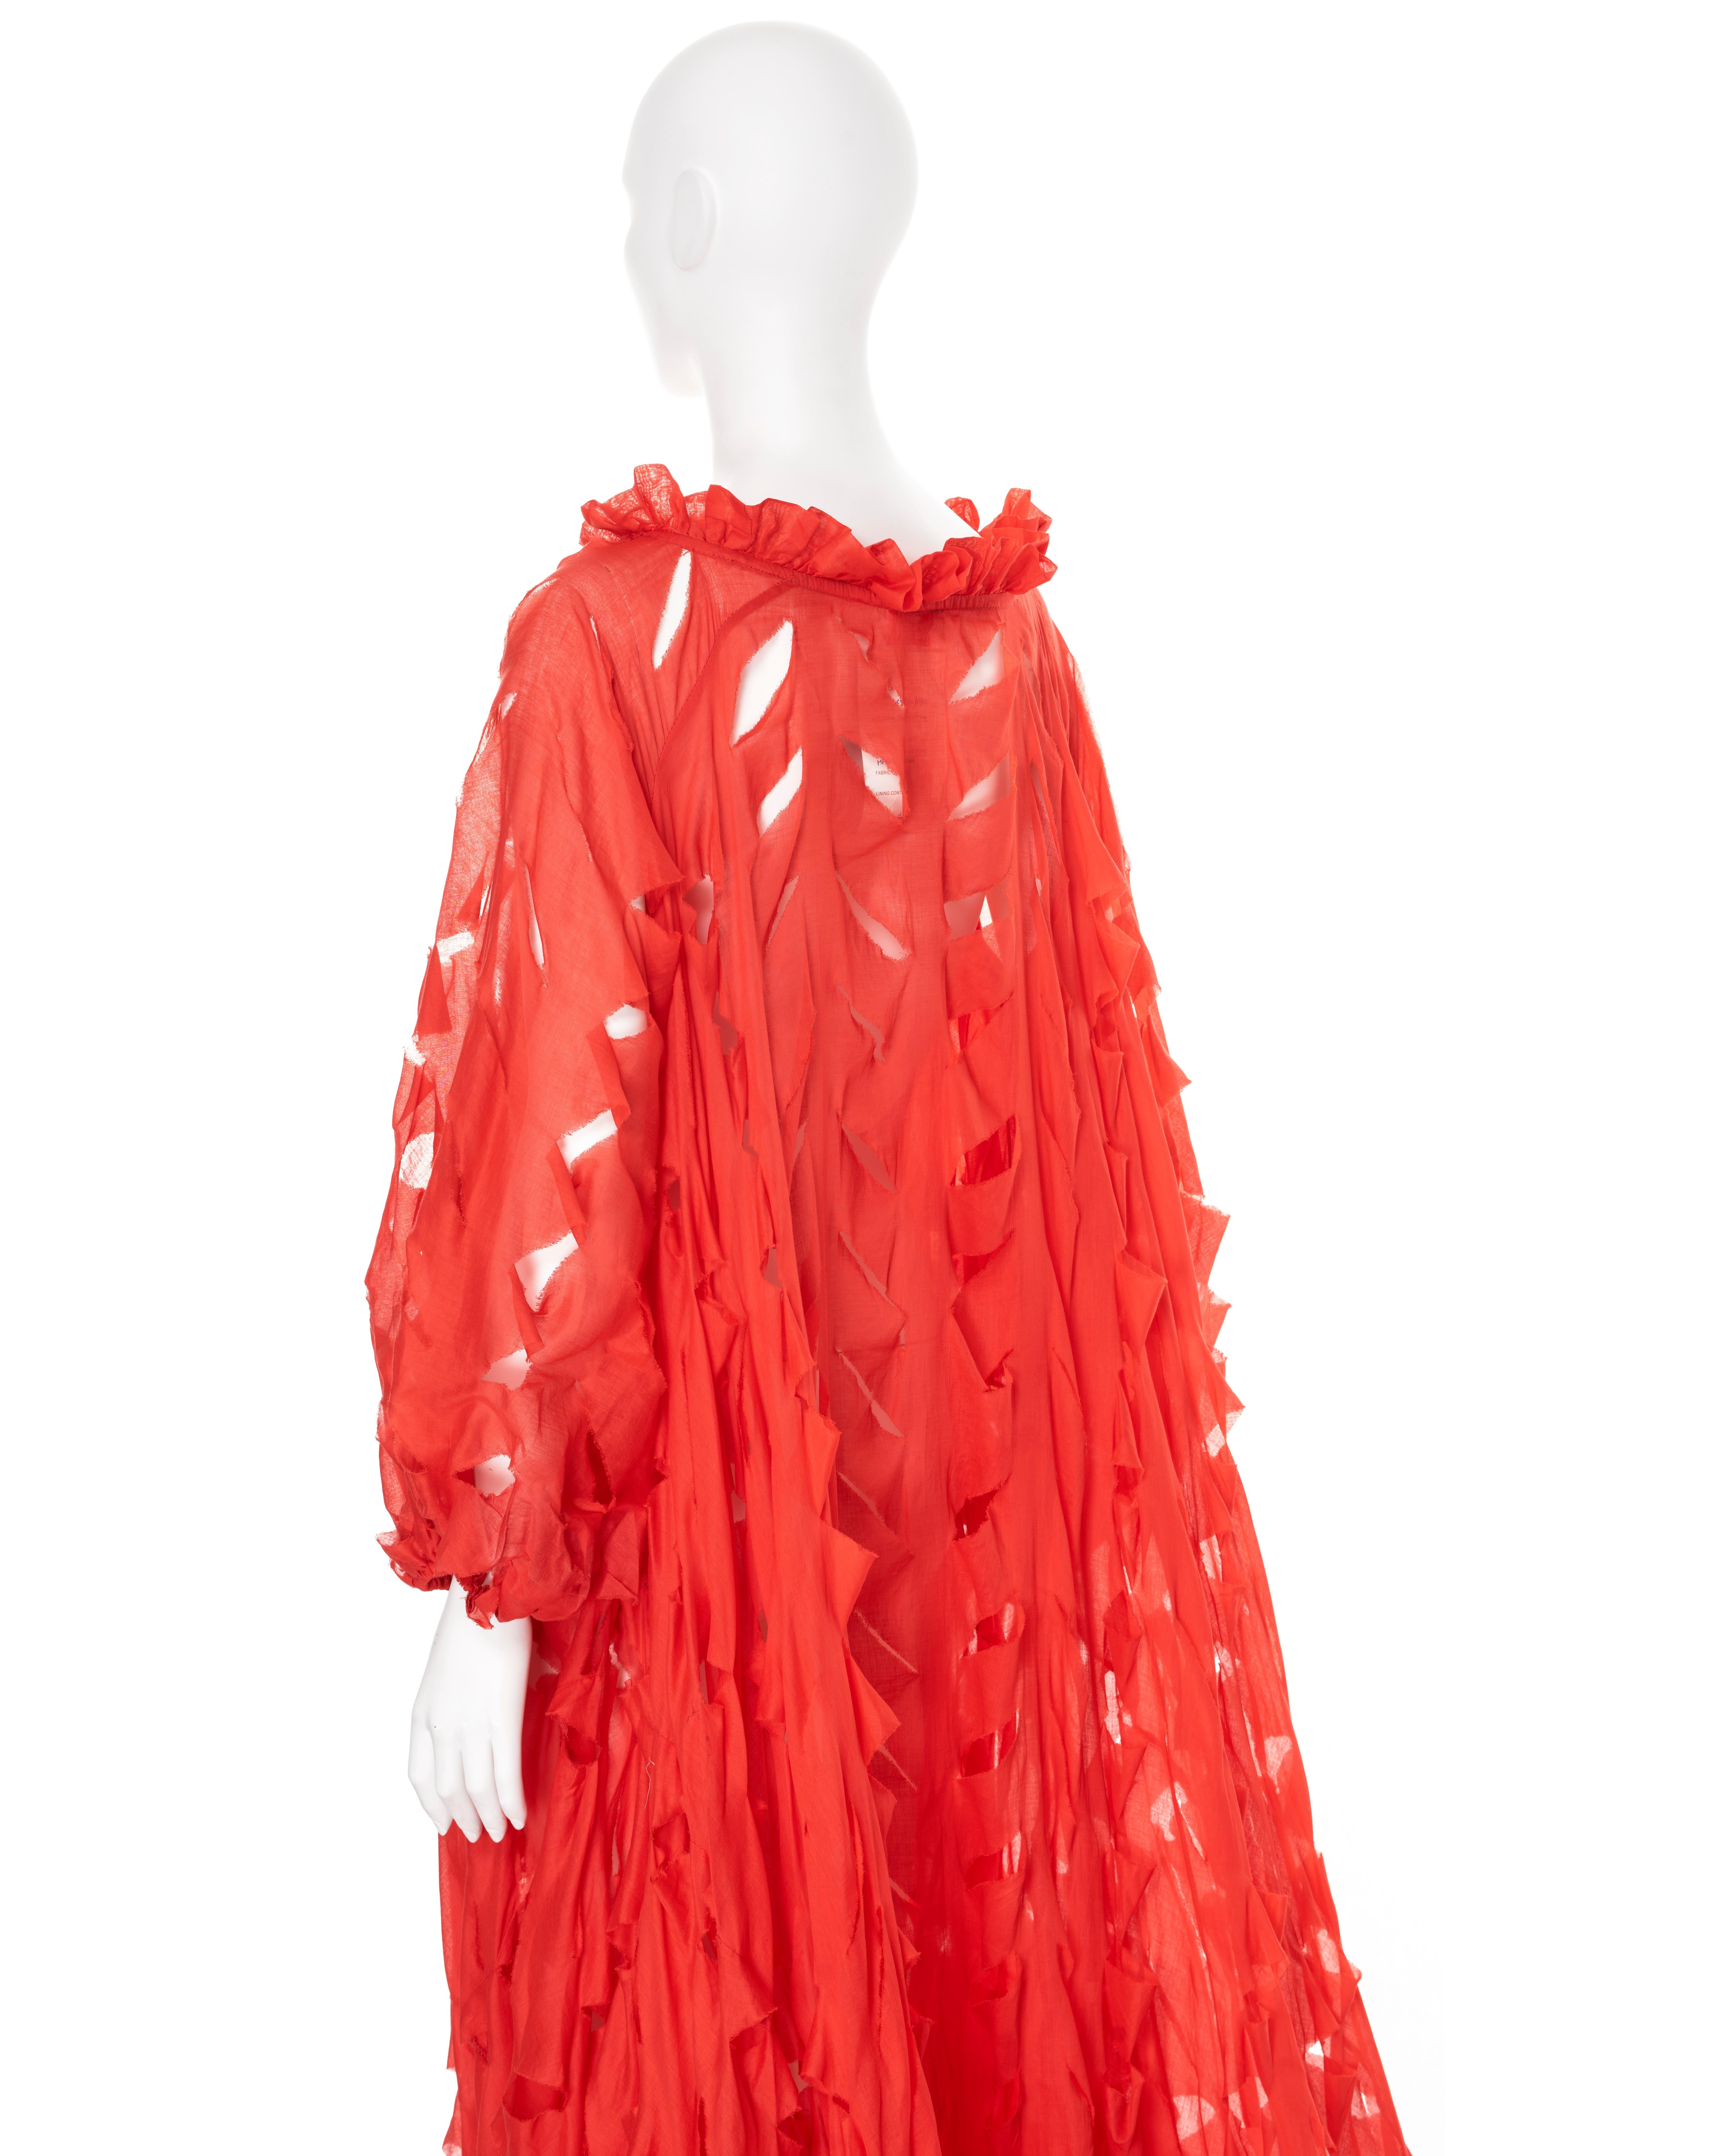 Vivienne Westwood hand-cut red cotton circle-cut dress, ss 1991 For Sale 6